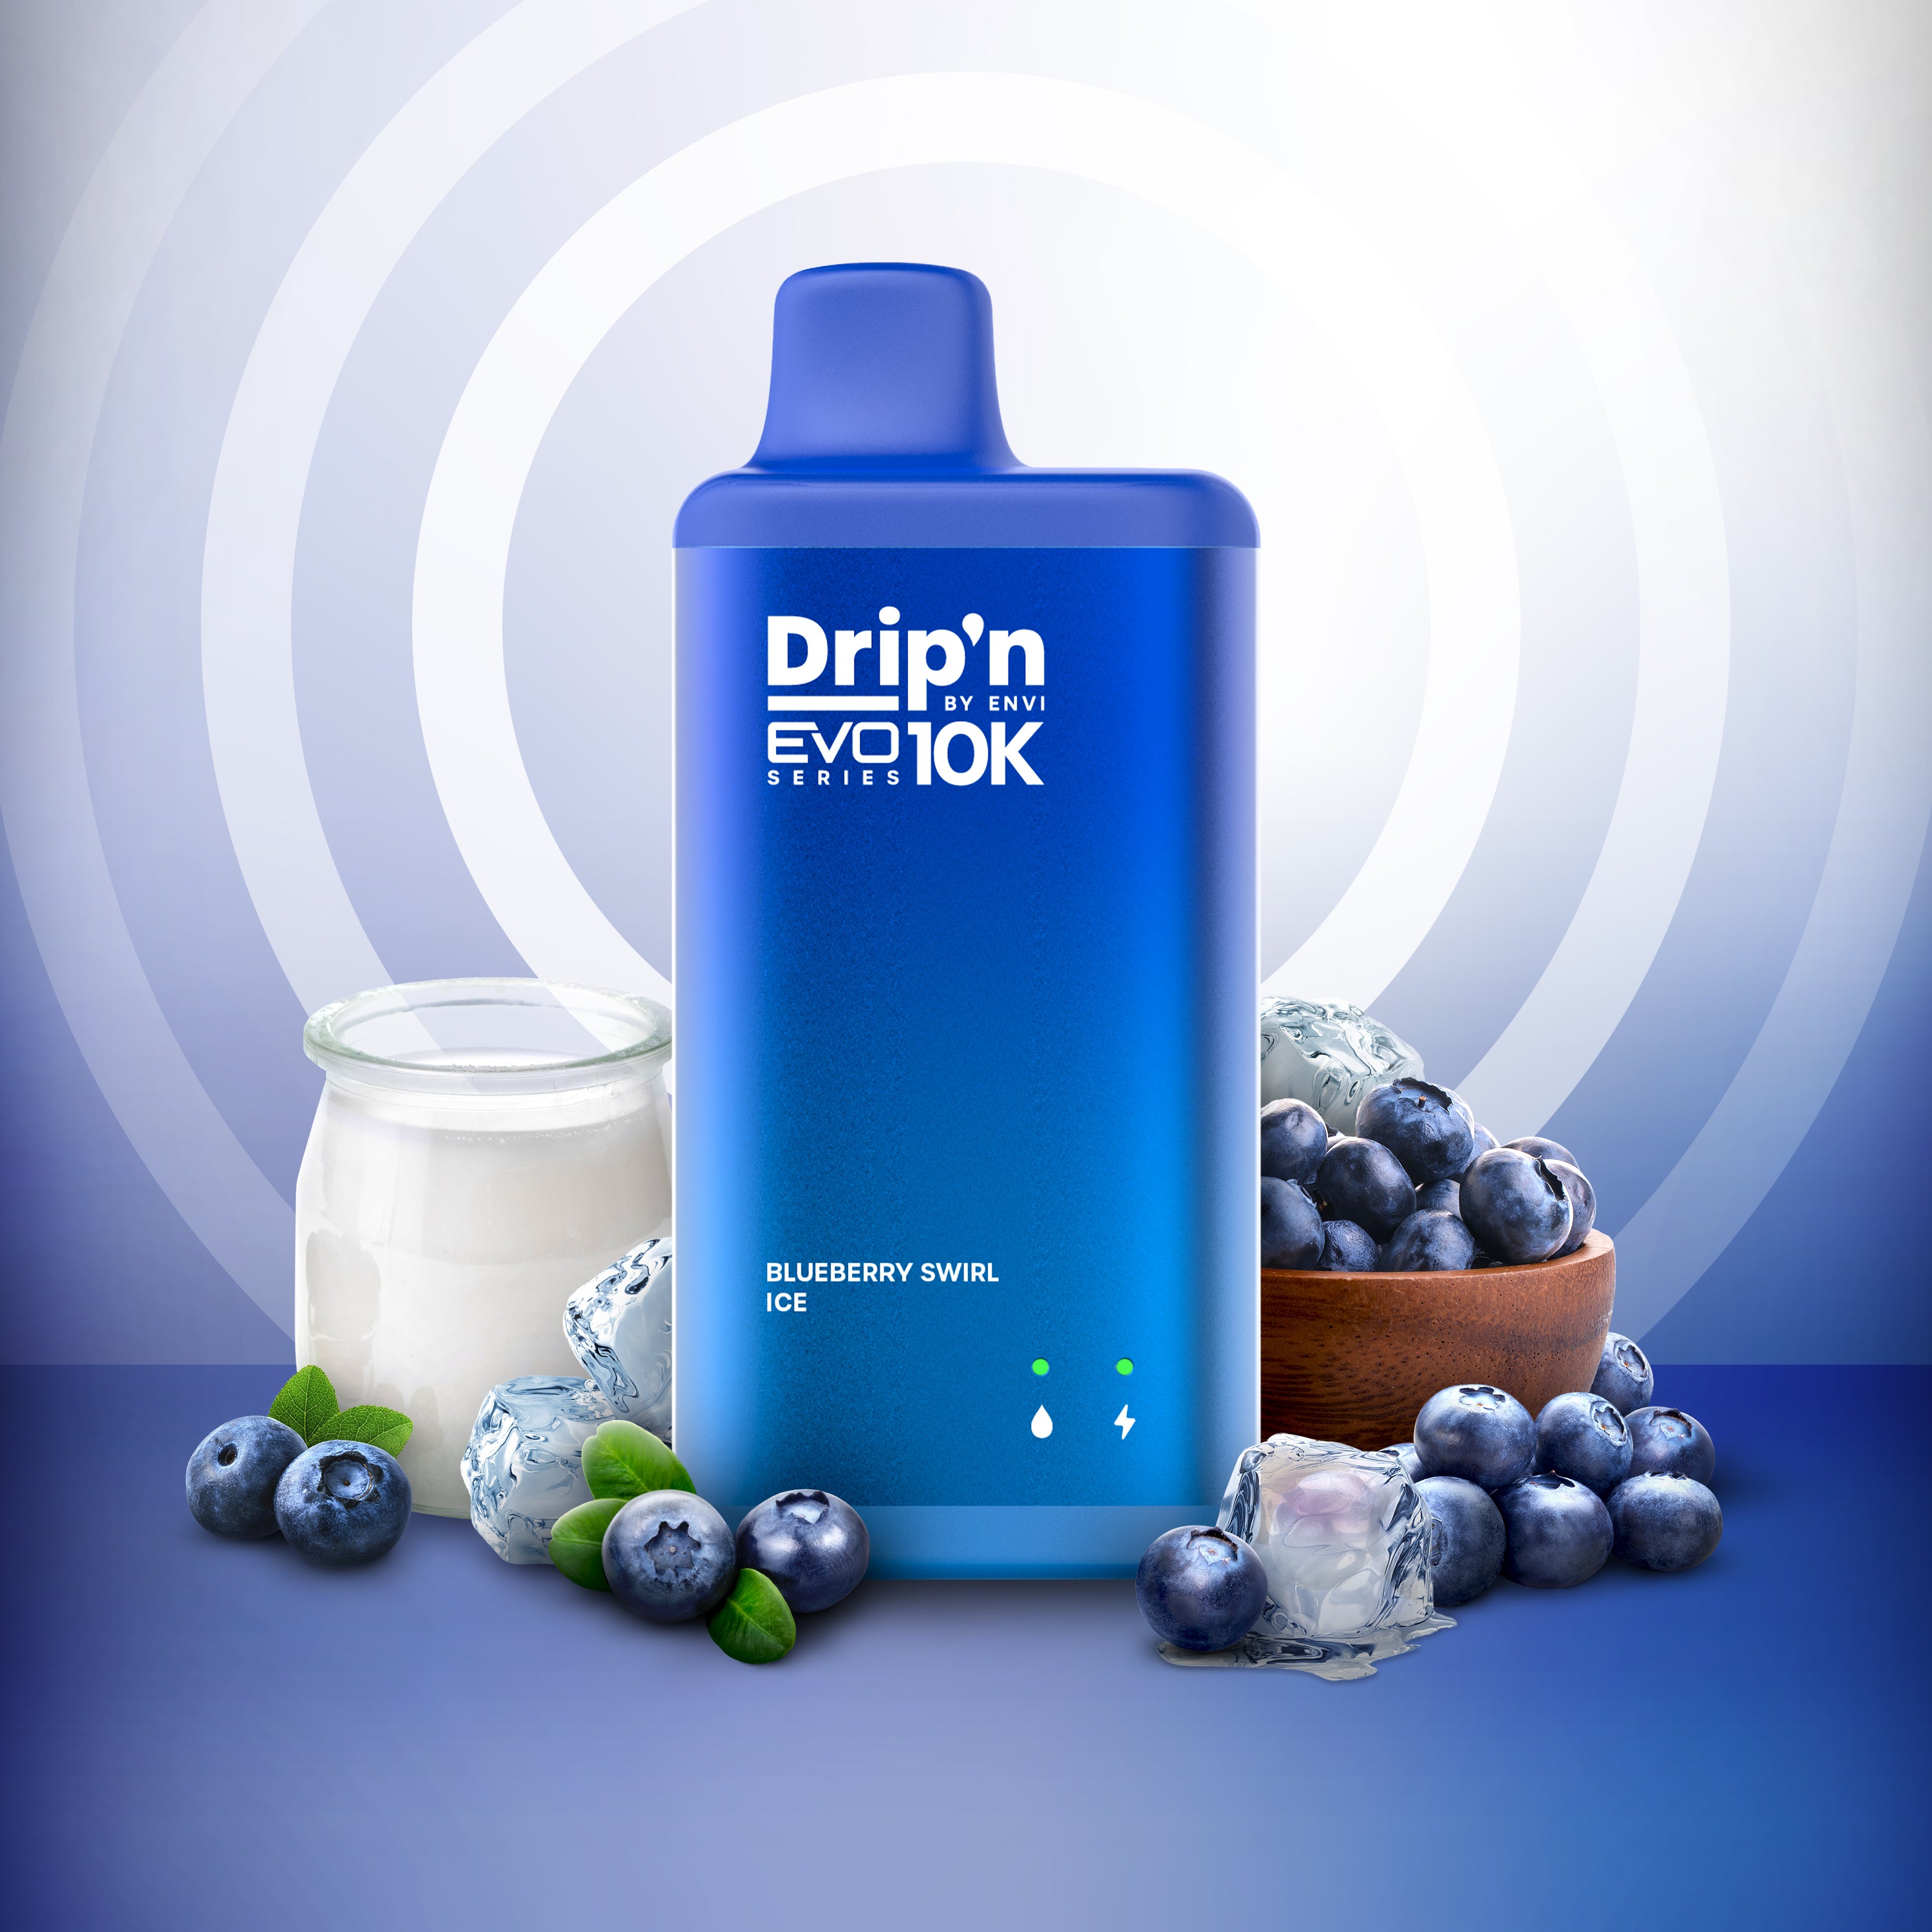 Blueberry Swirl Ice - Drip'n by Envi EVO 10K - 5pc/Carton